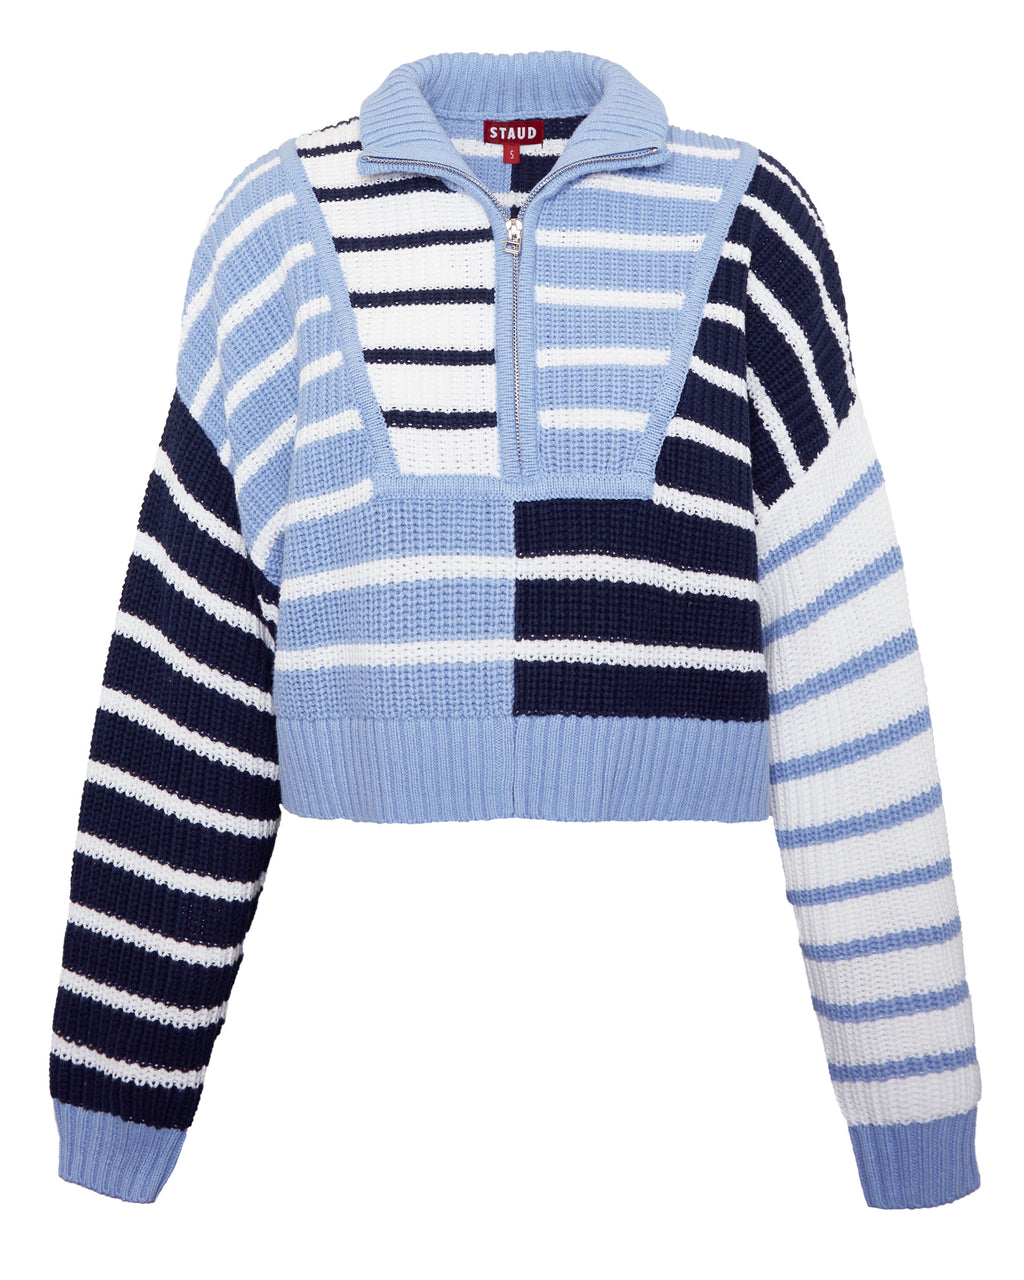 Cropped Hampton Sweater in Adriatic Stripe - 20% Off Editor's Picks